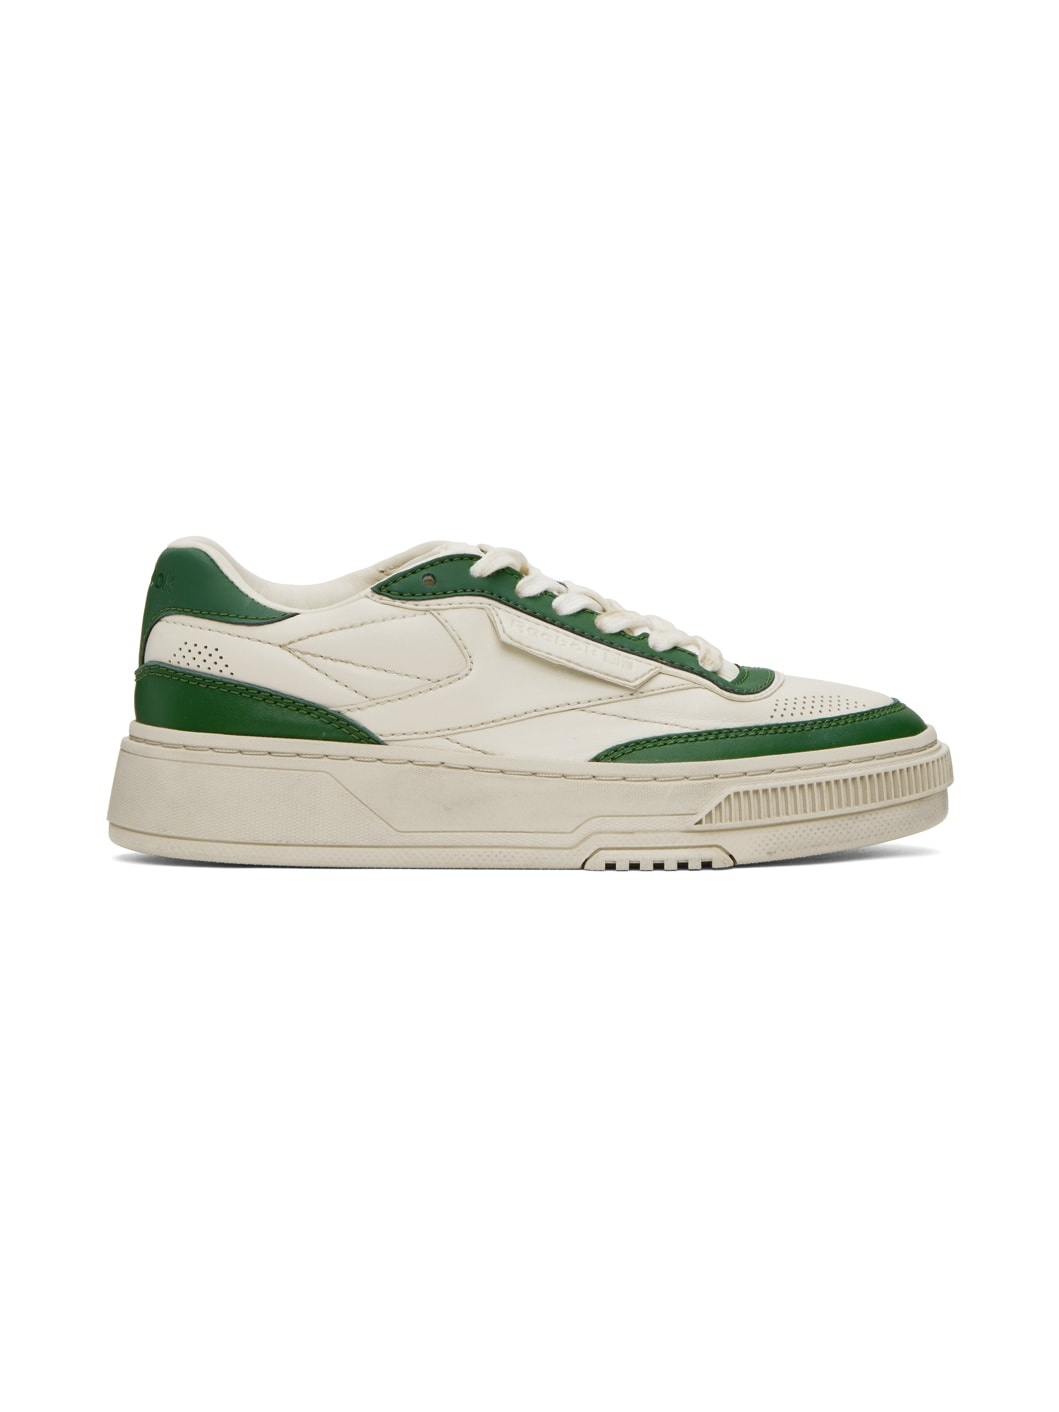 Off-White & Green Club C LTD Sneakers - 1